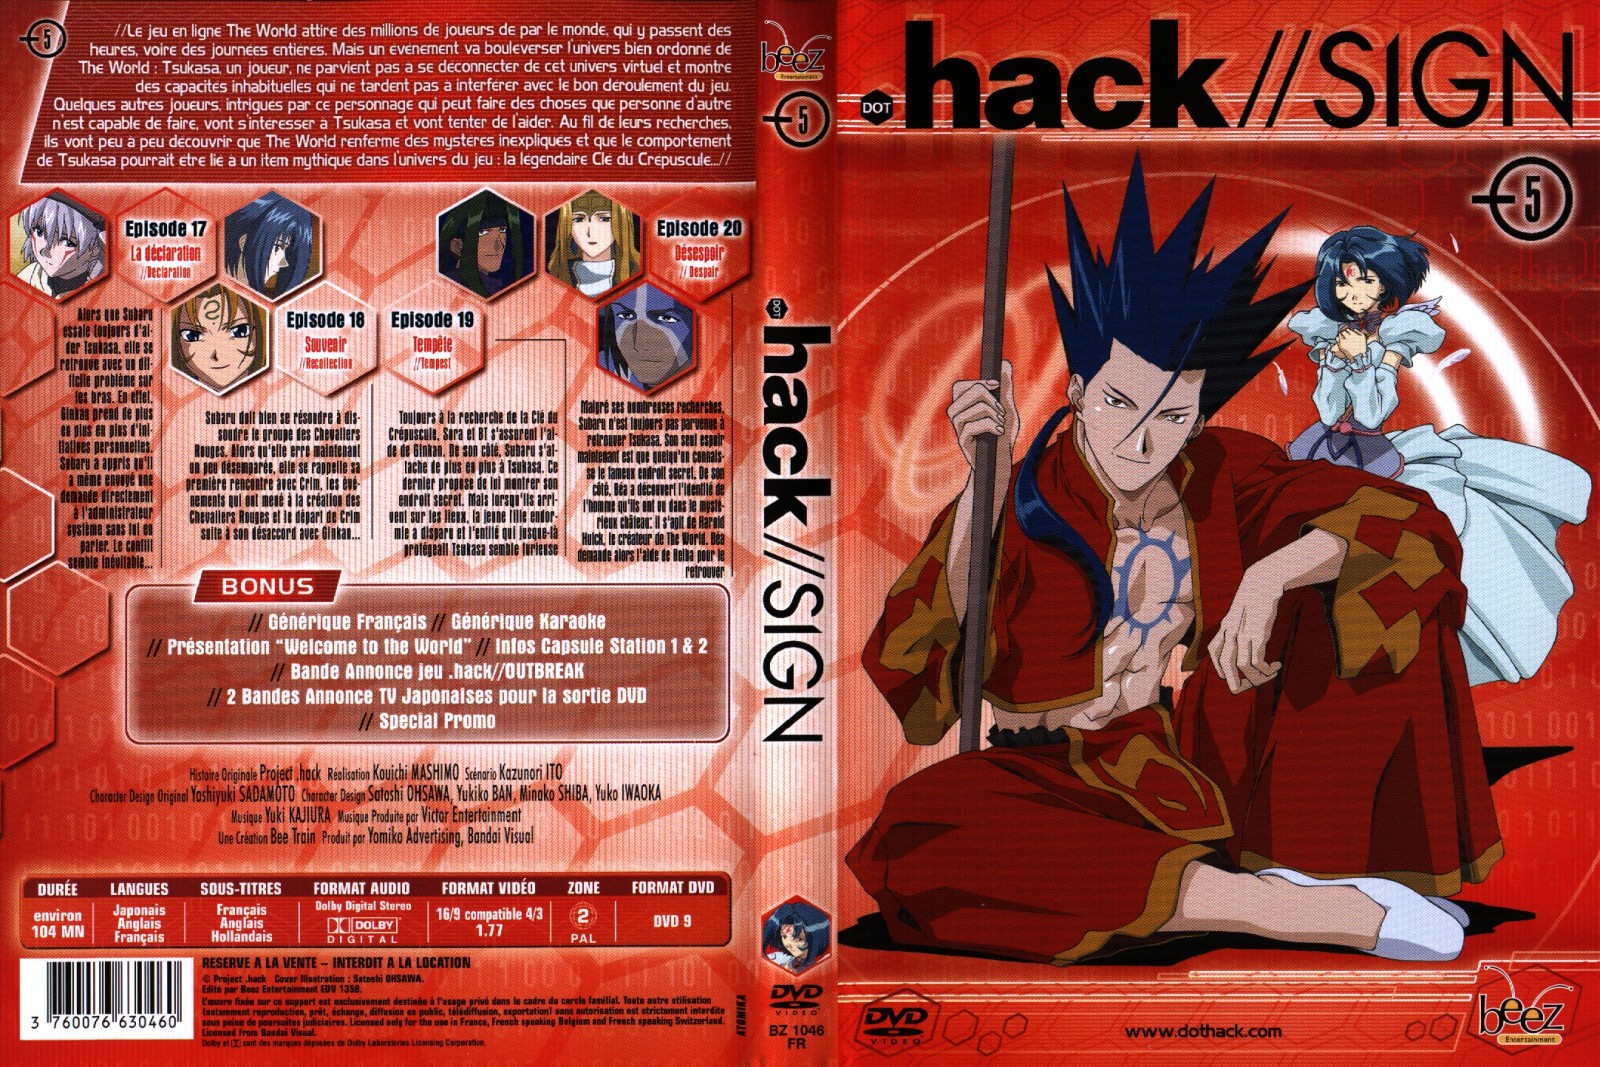 Jaquette DVD Hack vol 5